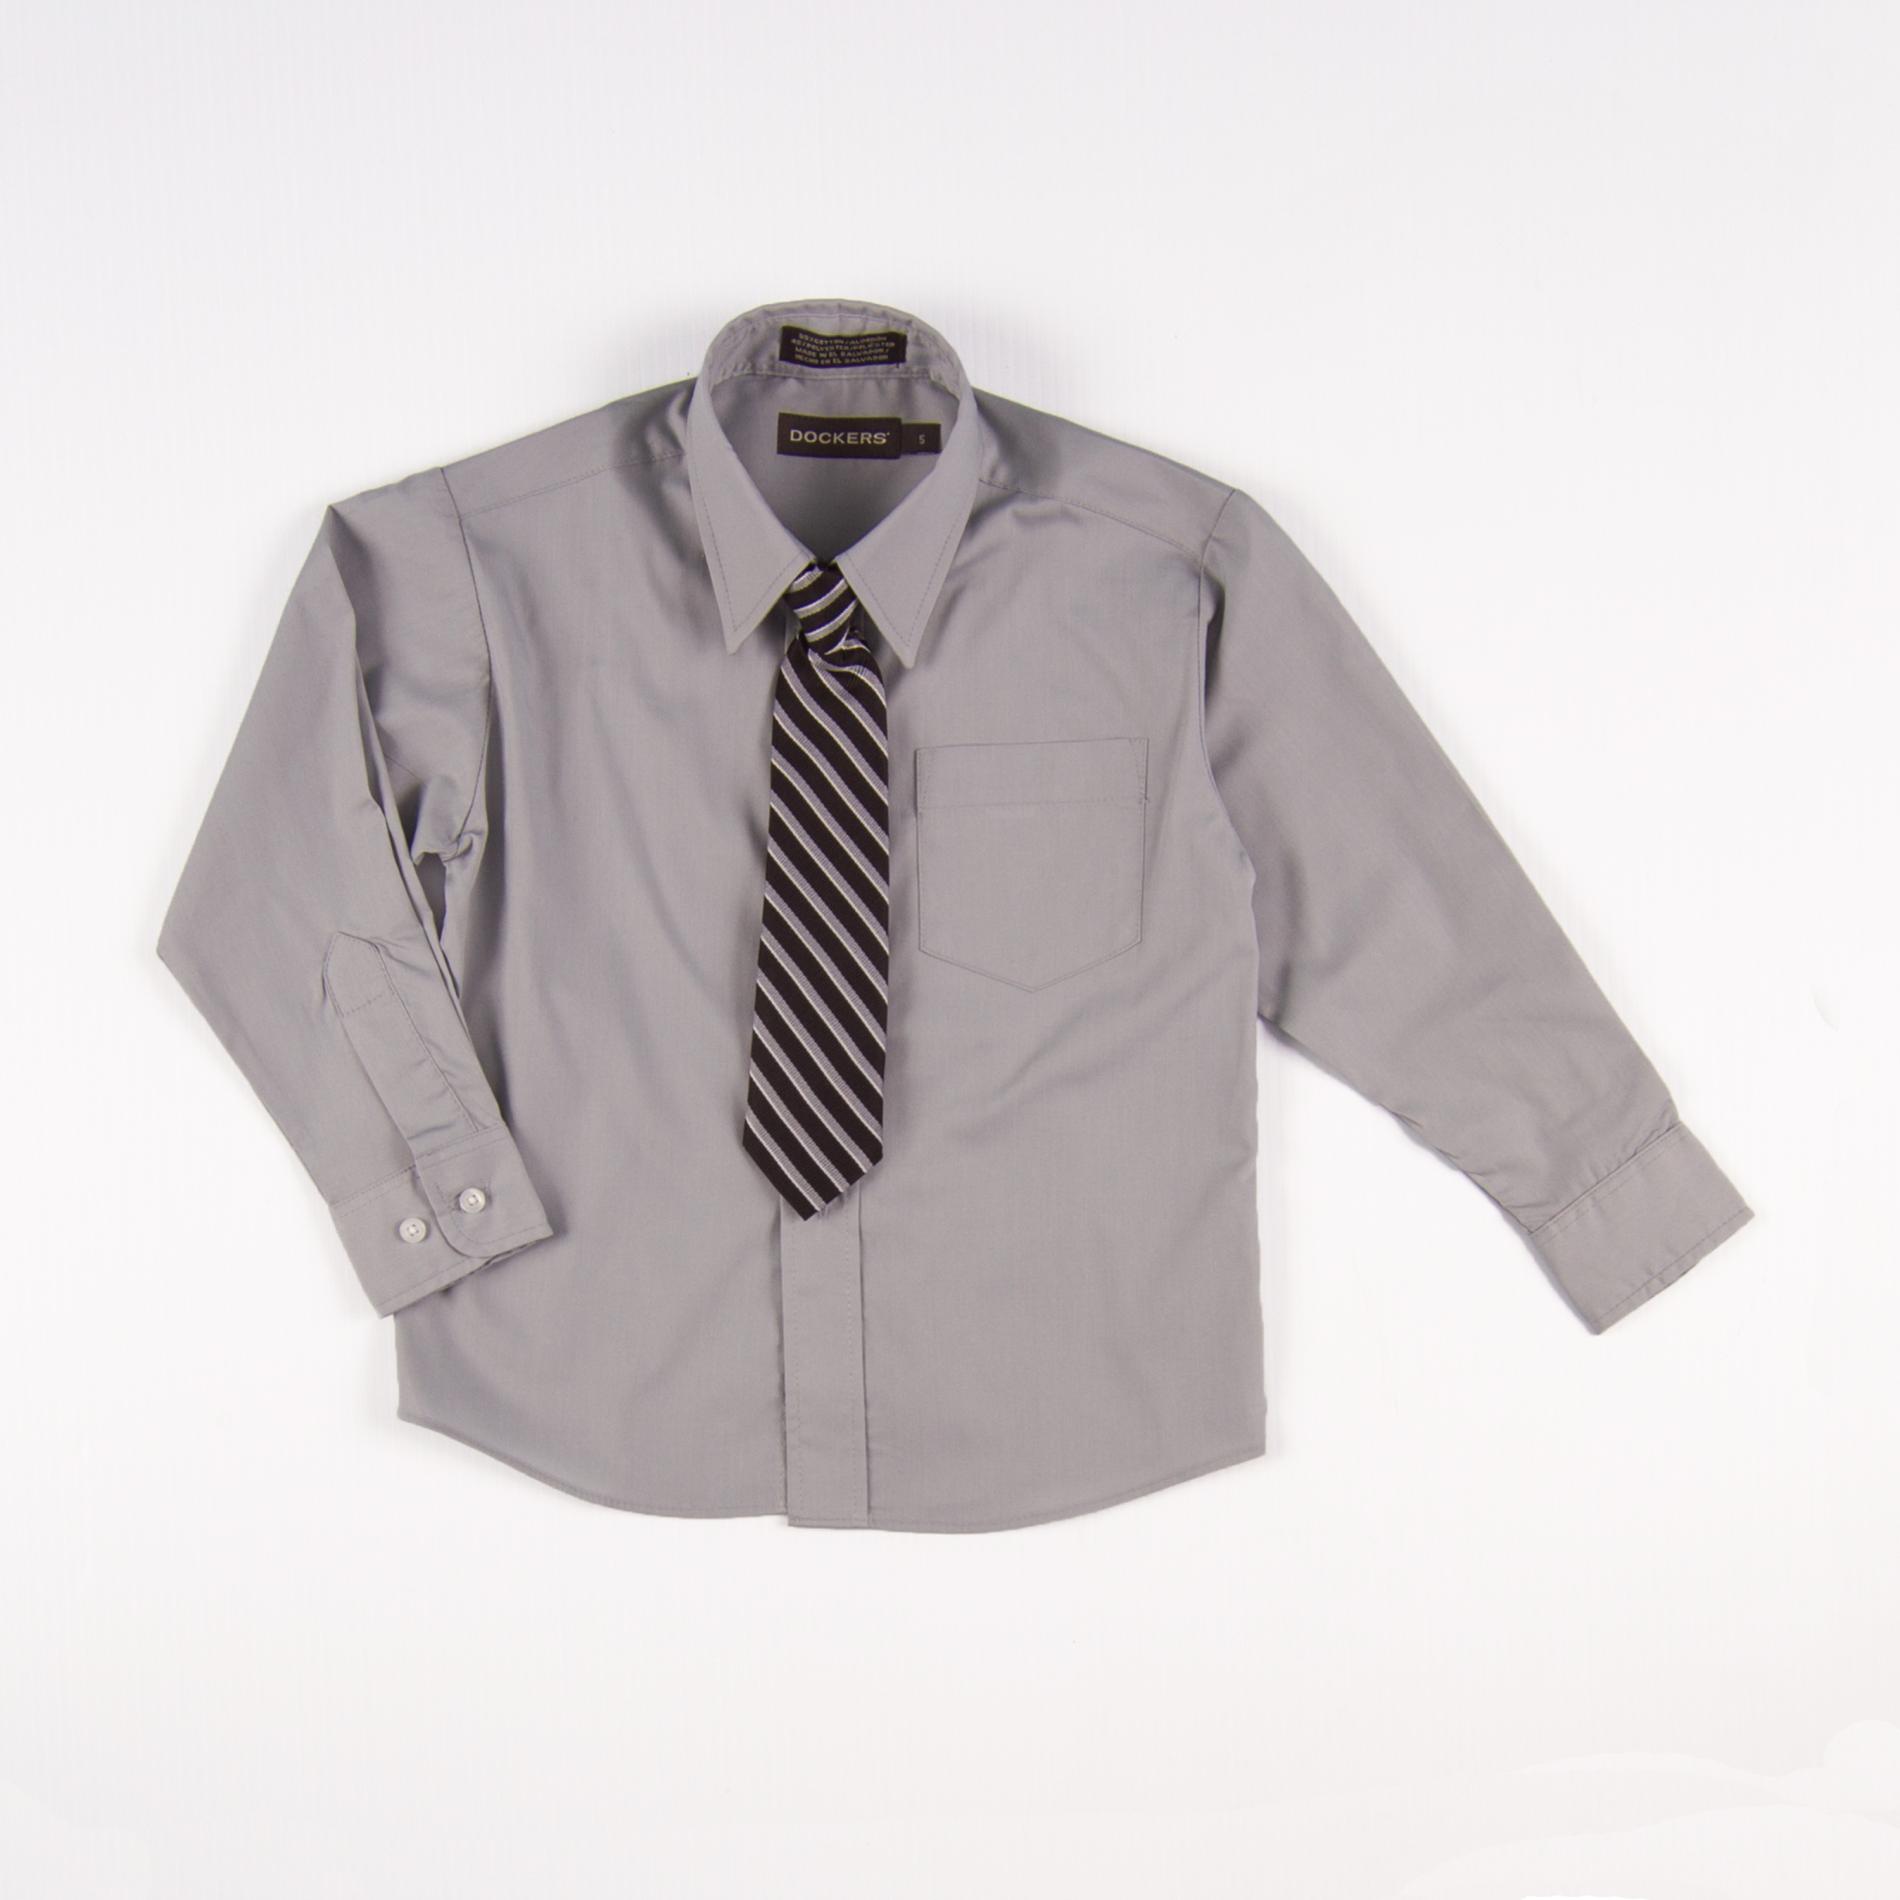 Dockers Boy's Button-Front Dress Shirt & Tie - Striped